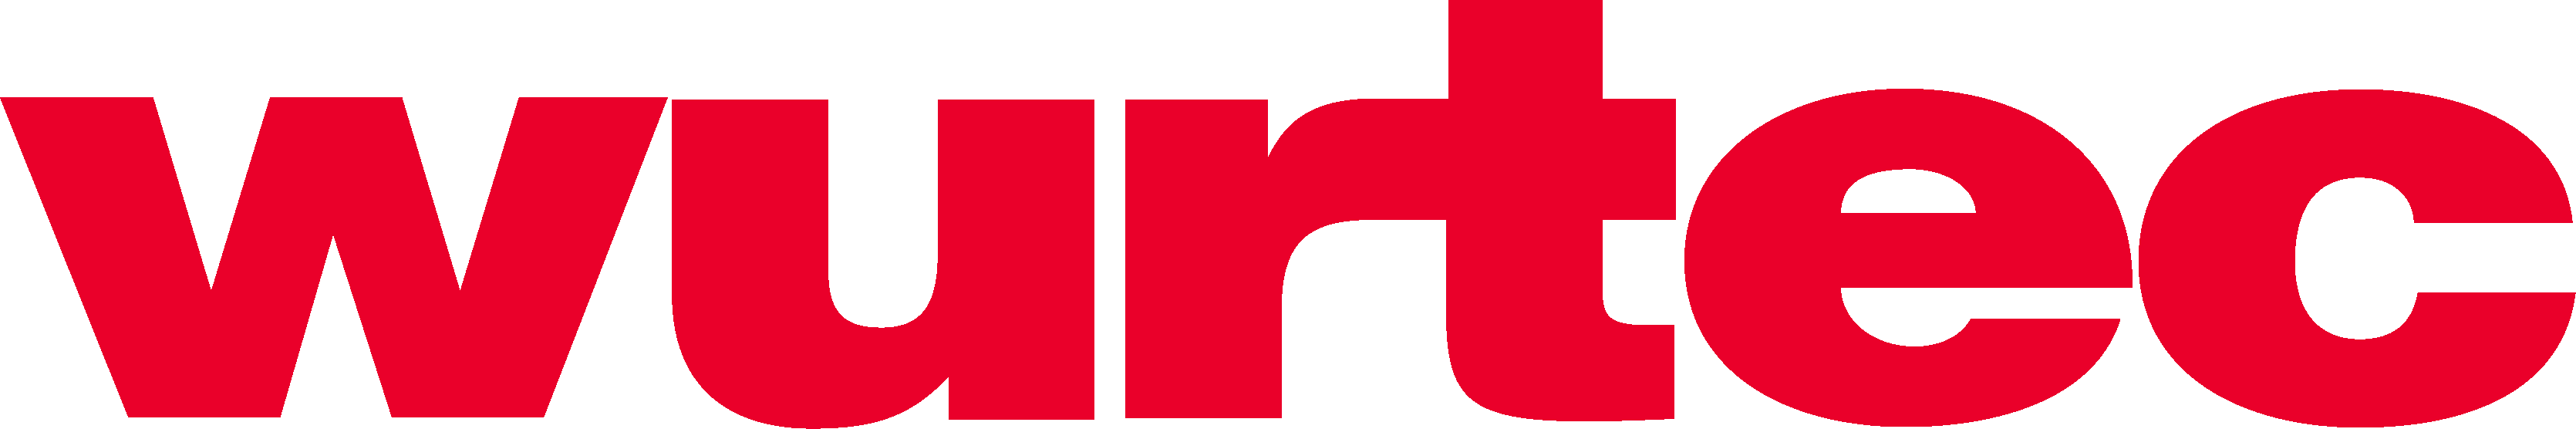 Wurtec, Inc. Company Logo